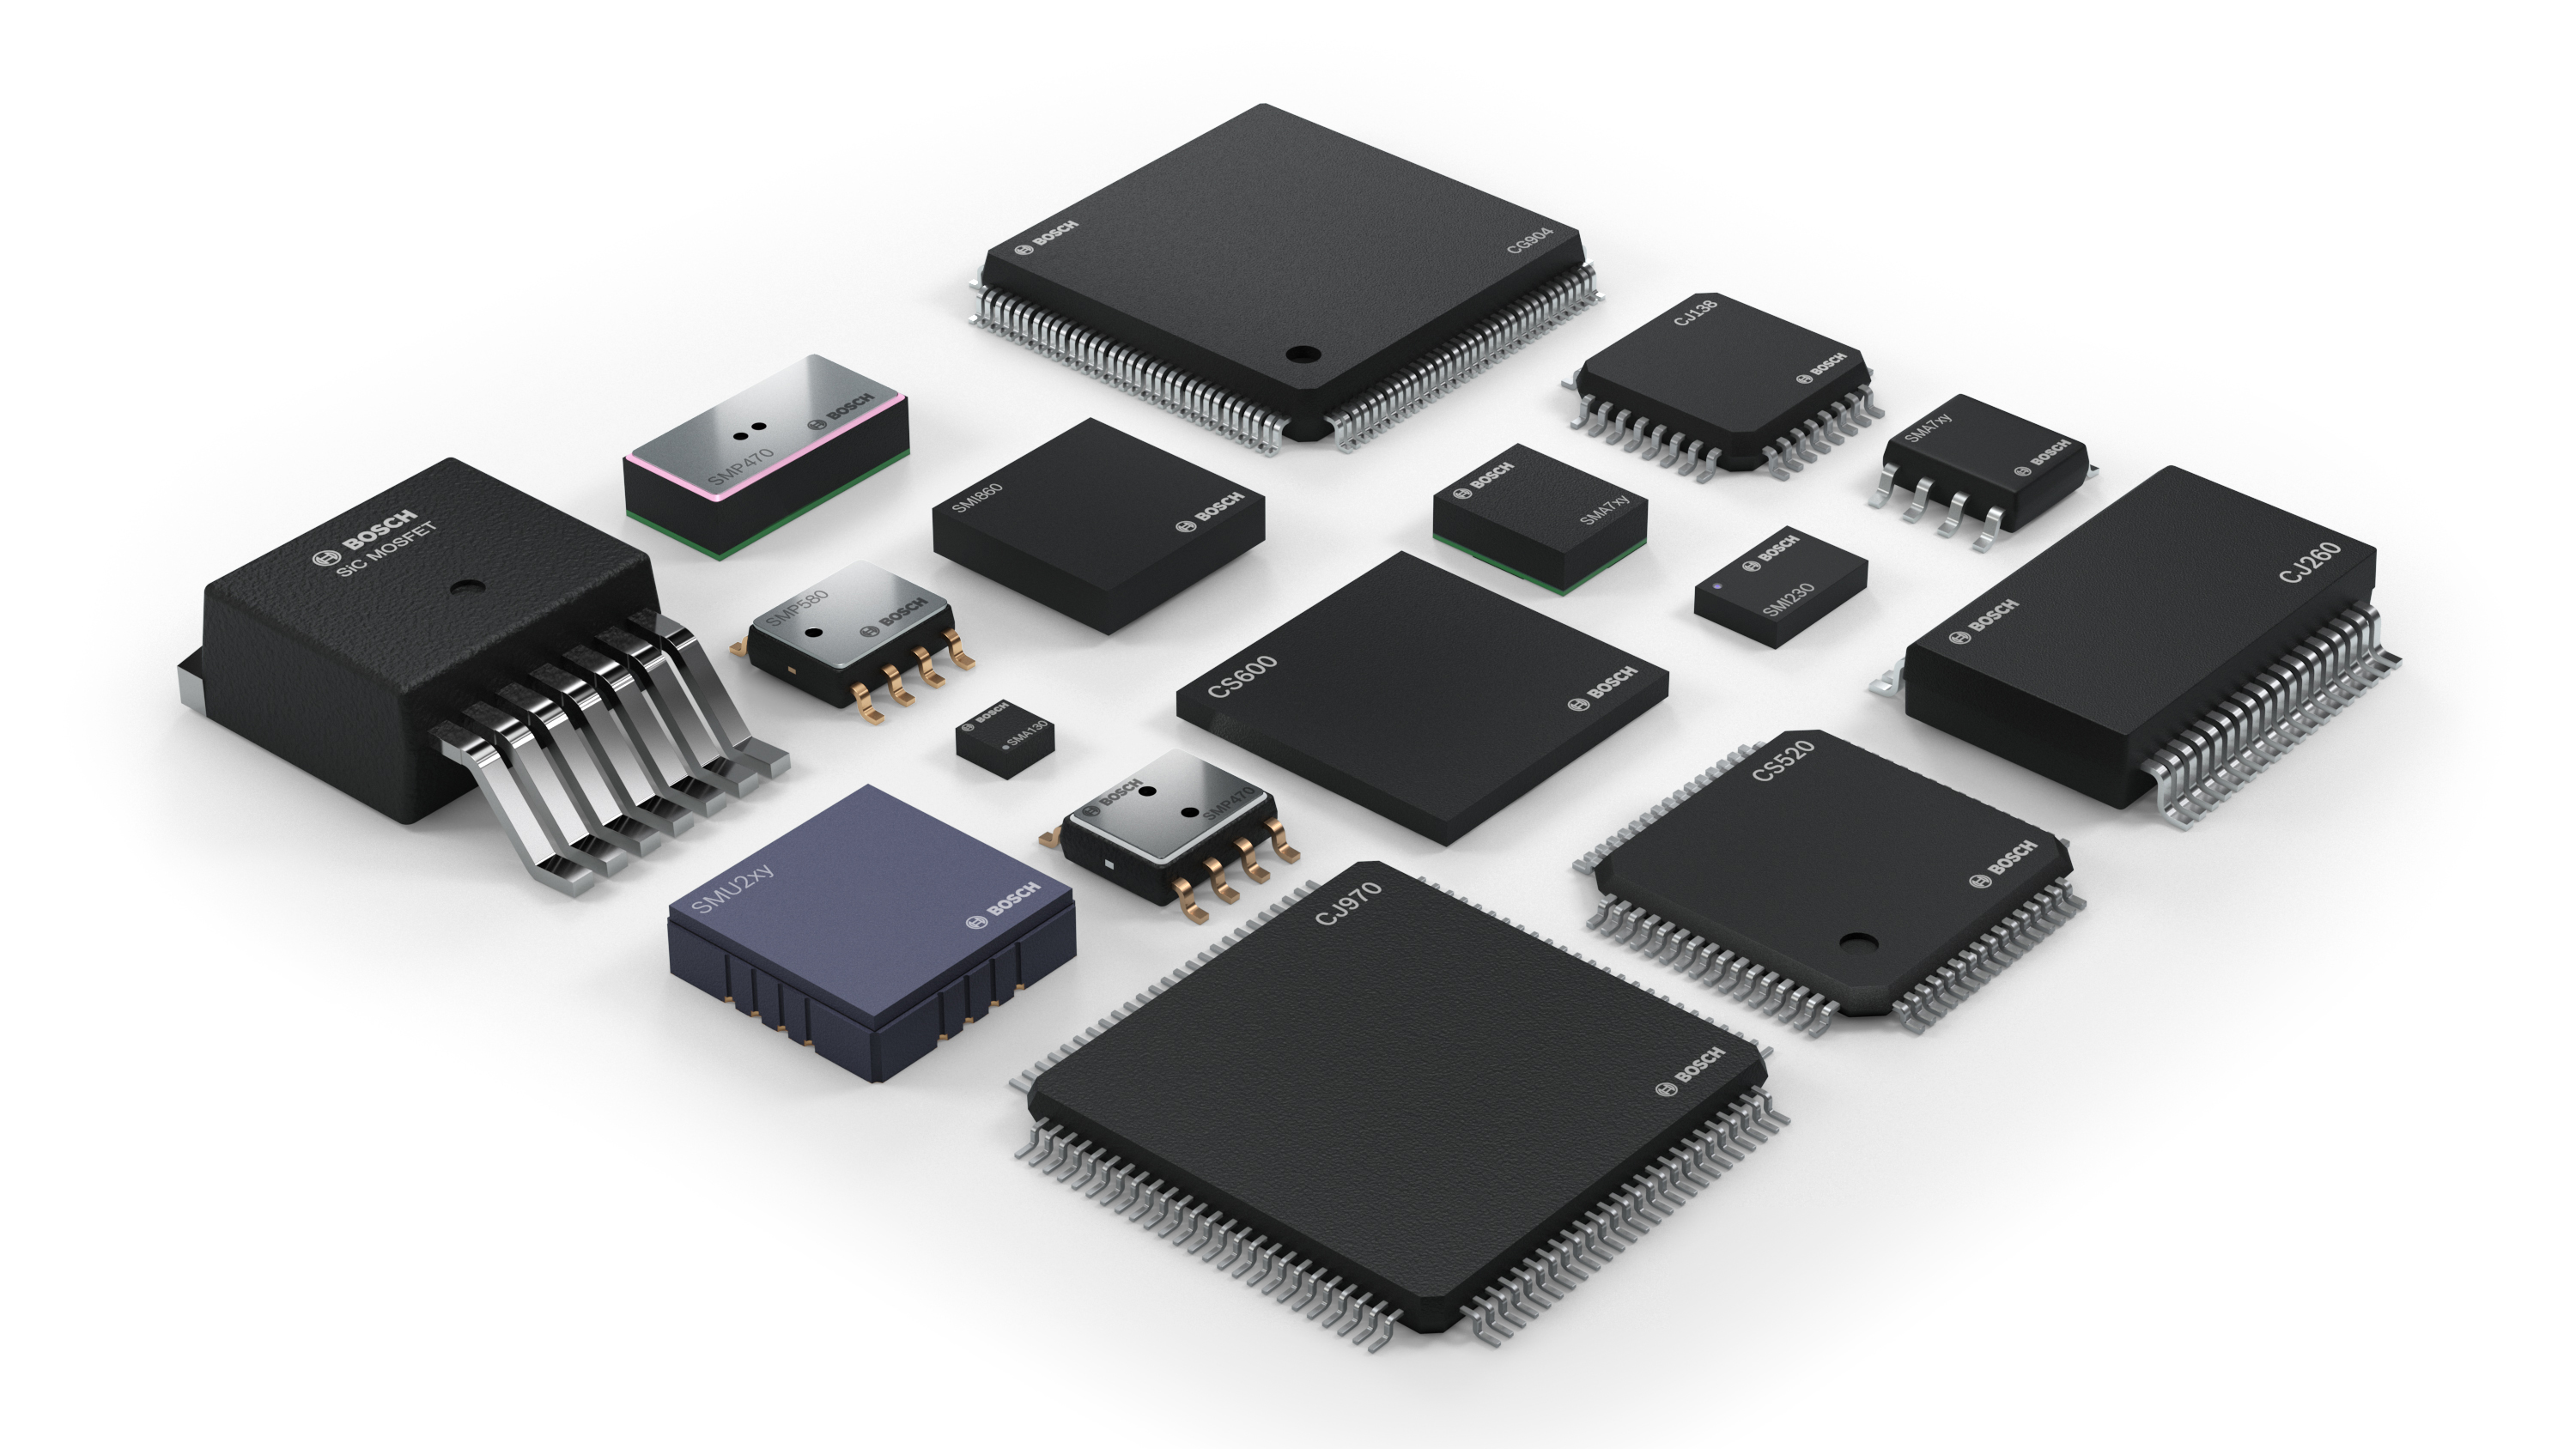 Bosch semiconductor portfolio